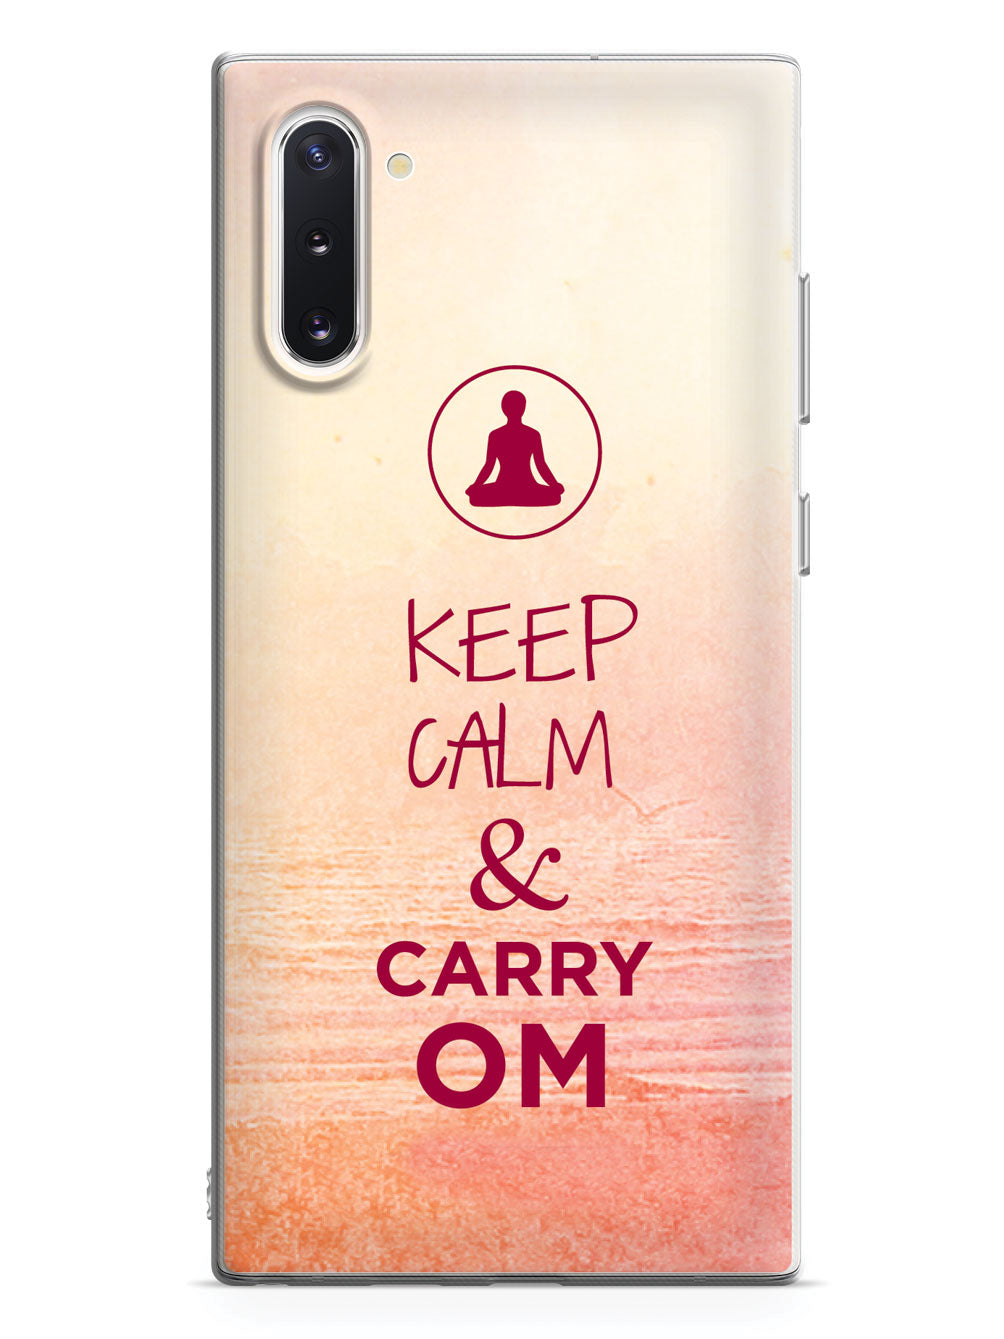 Keep Calm & Carry Om - Yoga Humor Funny Case